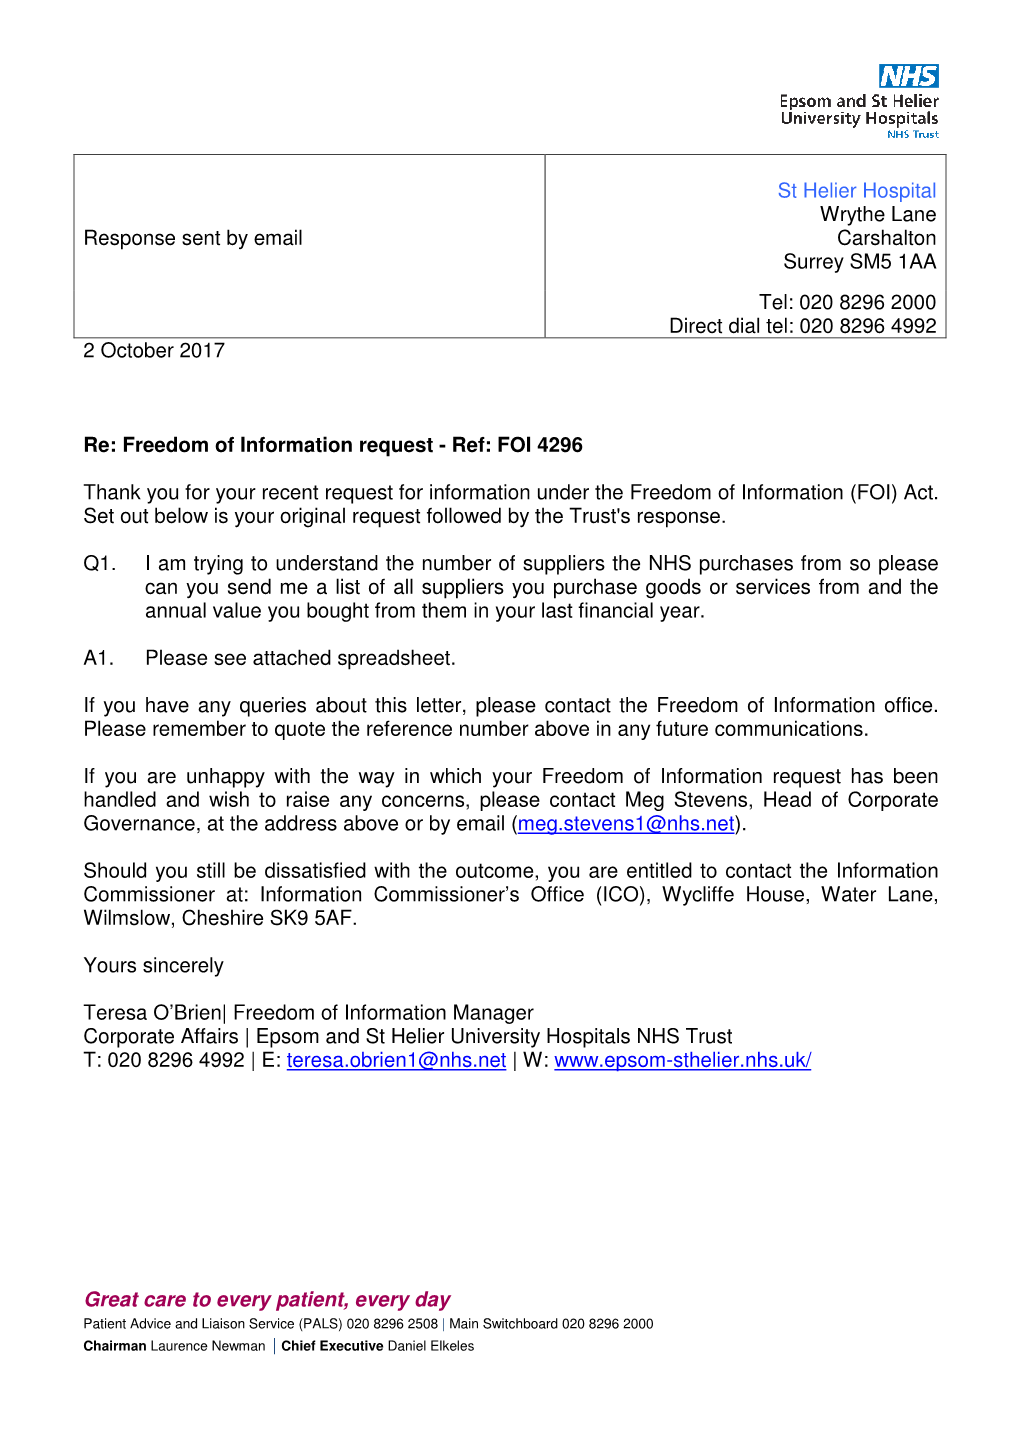 Wrythe Lane Response Sent by Email Carshalton Surrey SM5 1AA